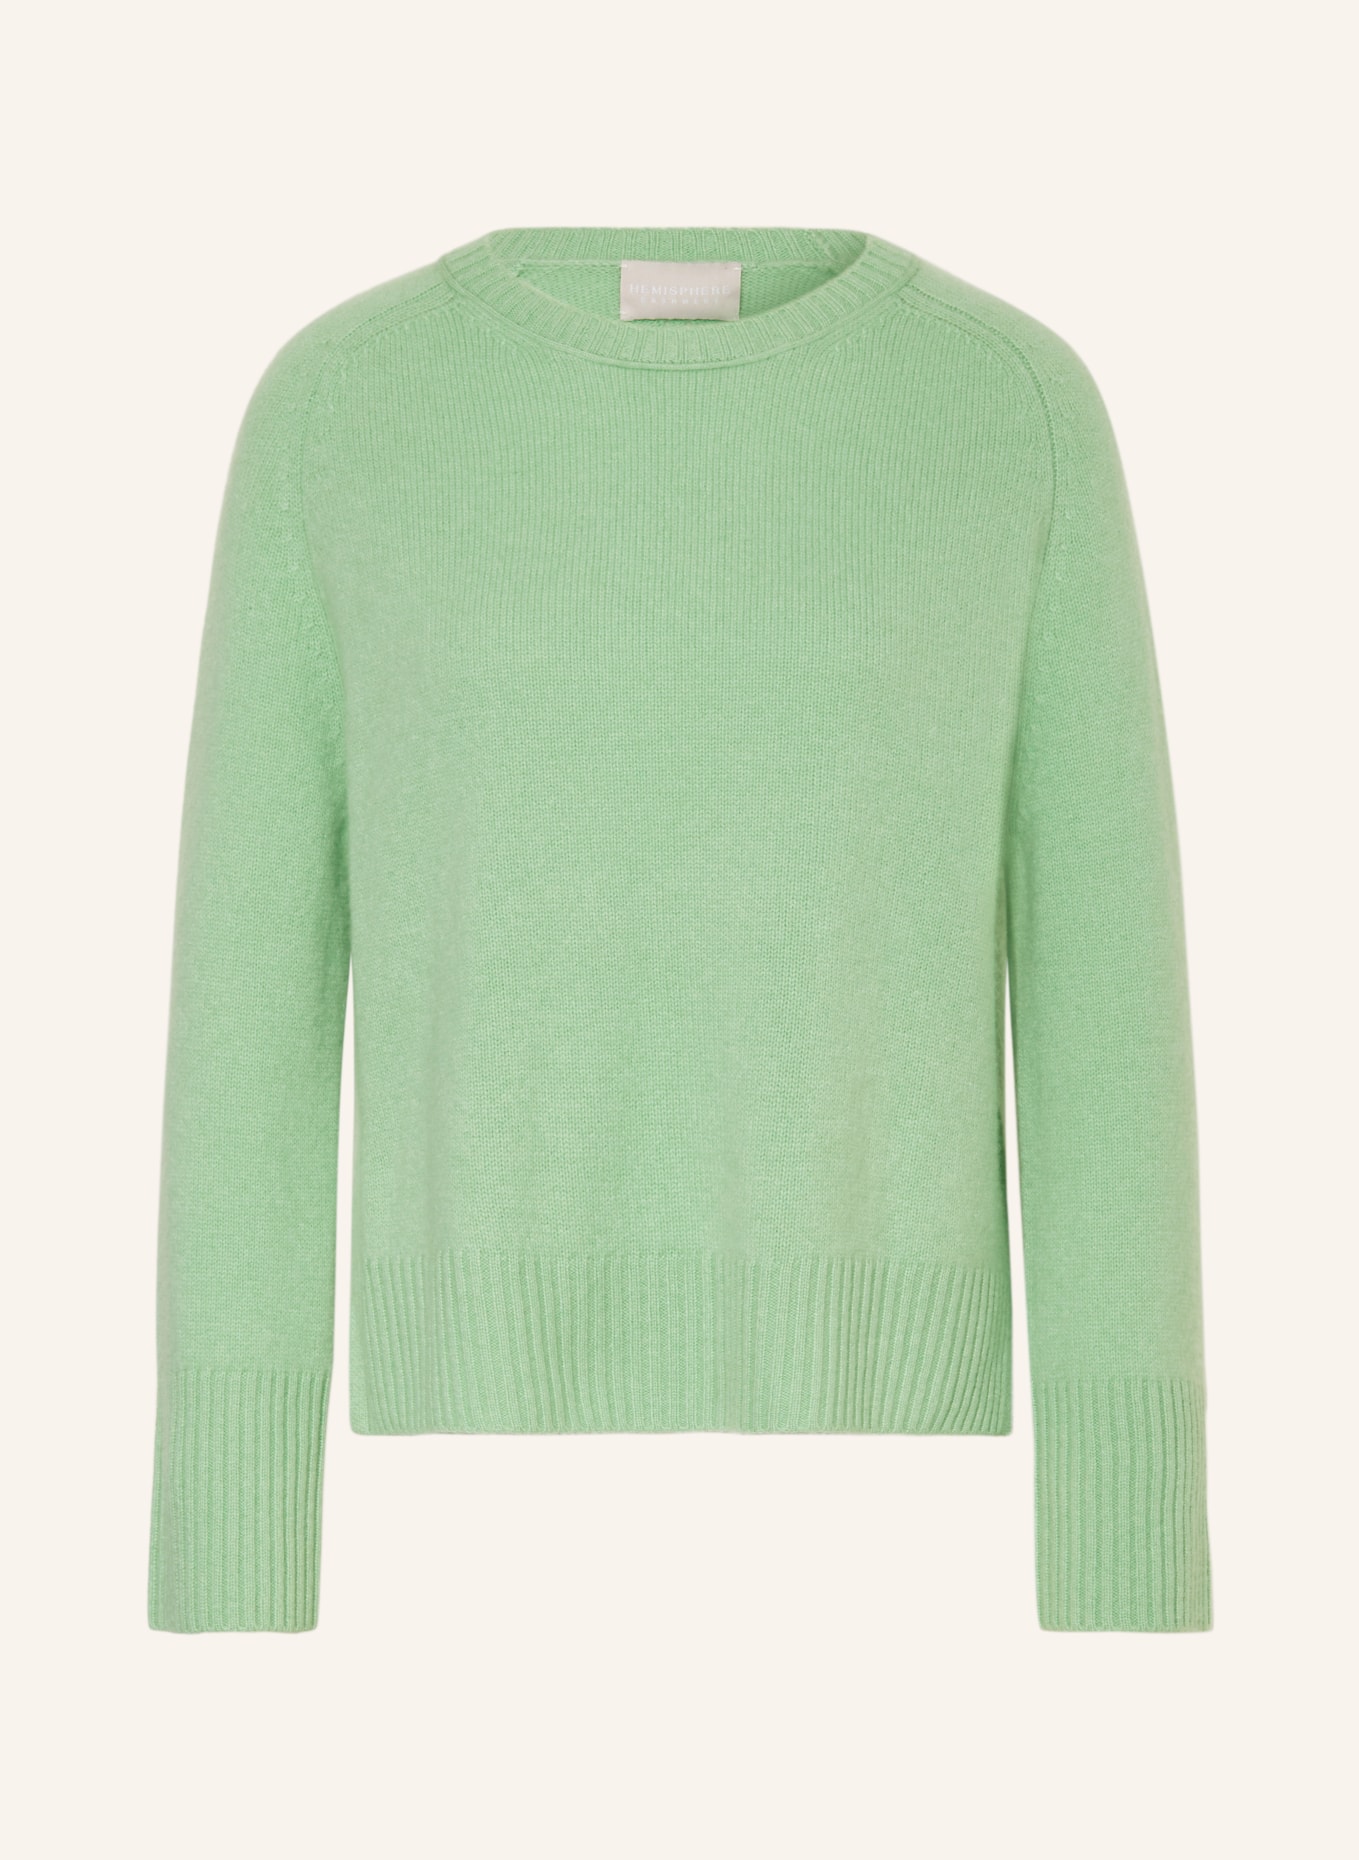 HEMISPHERE Cashmere-Pullover, Farbe: HELLGRÜN (Bild 1)